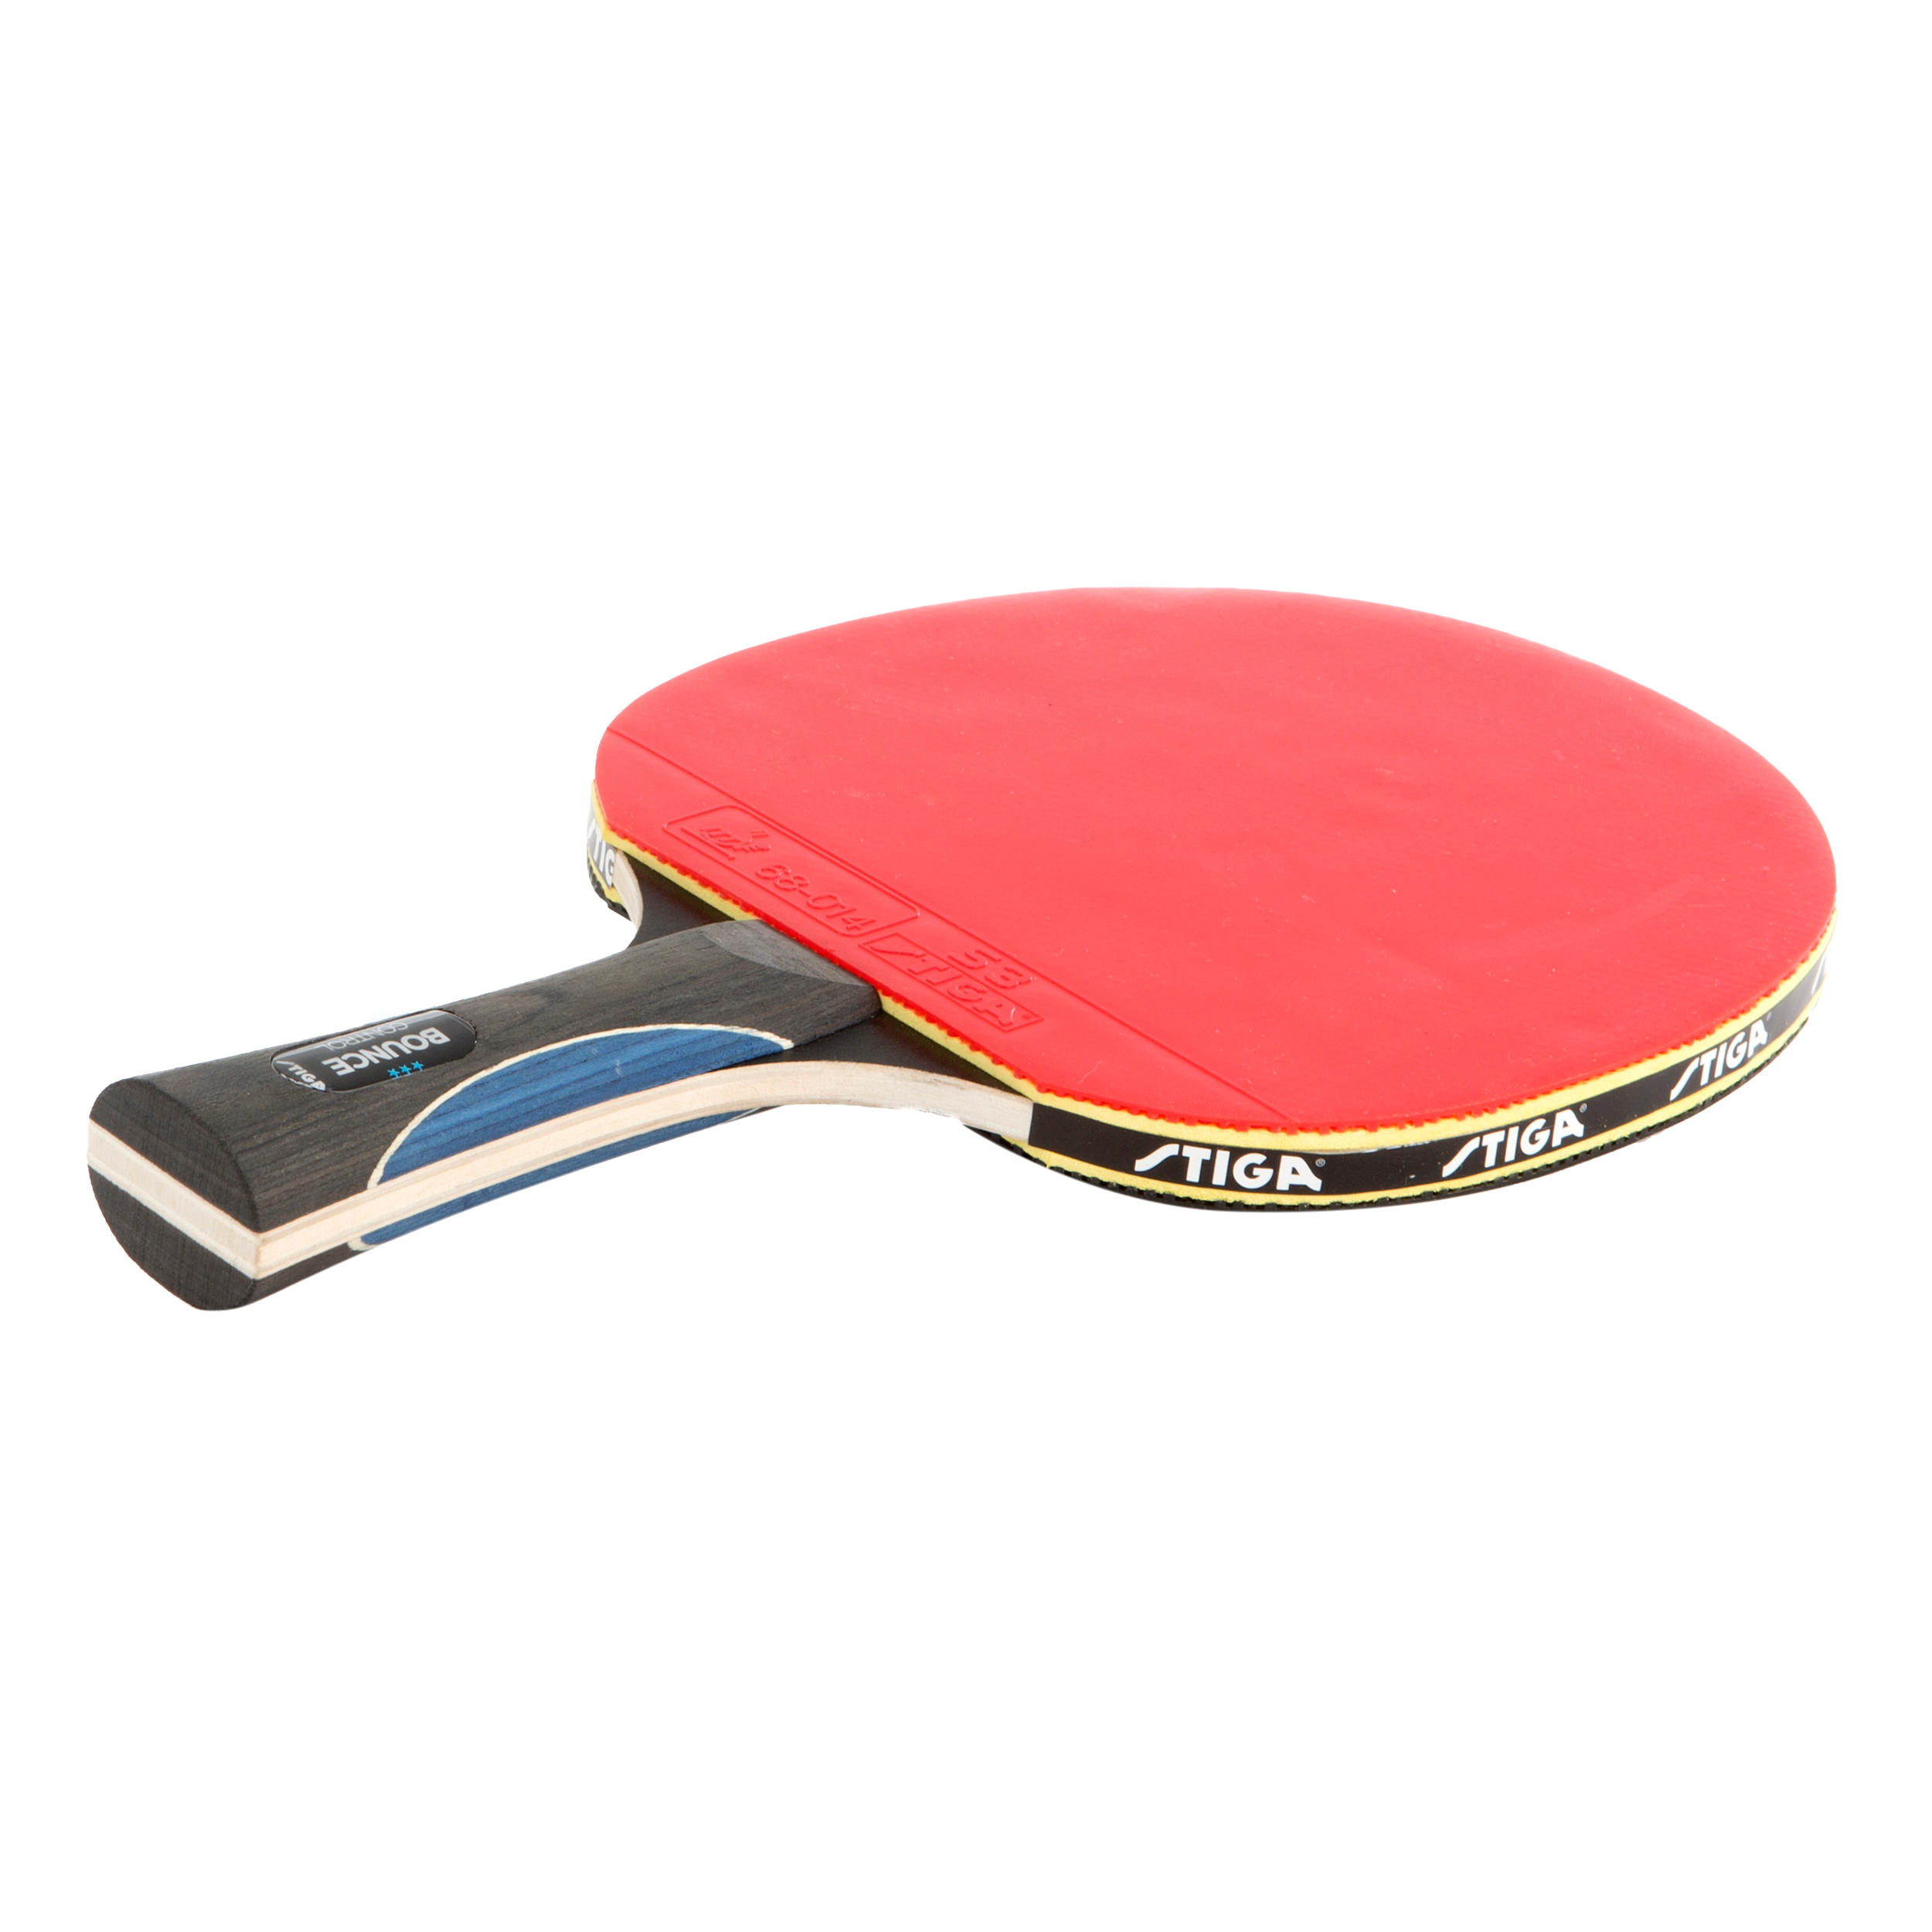 Club Table Tennis Bat Bounce Control 3* 11/15